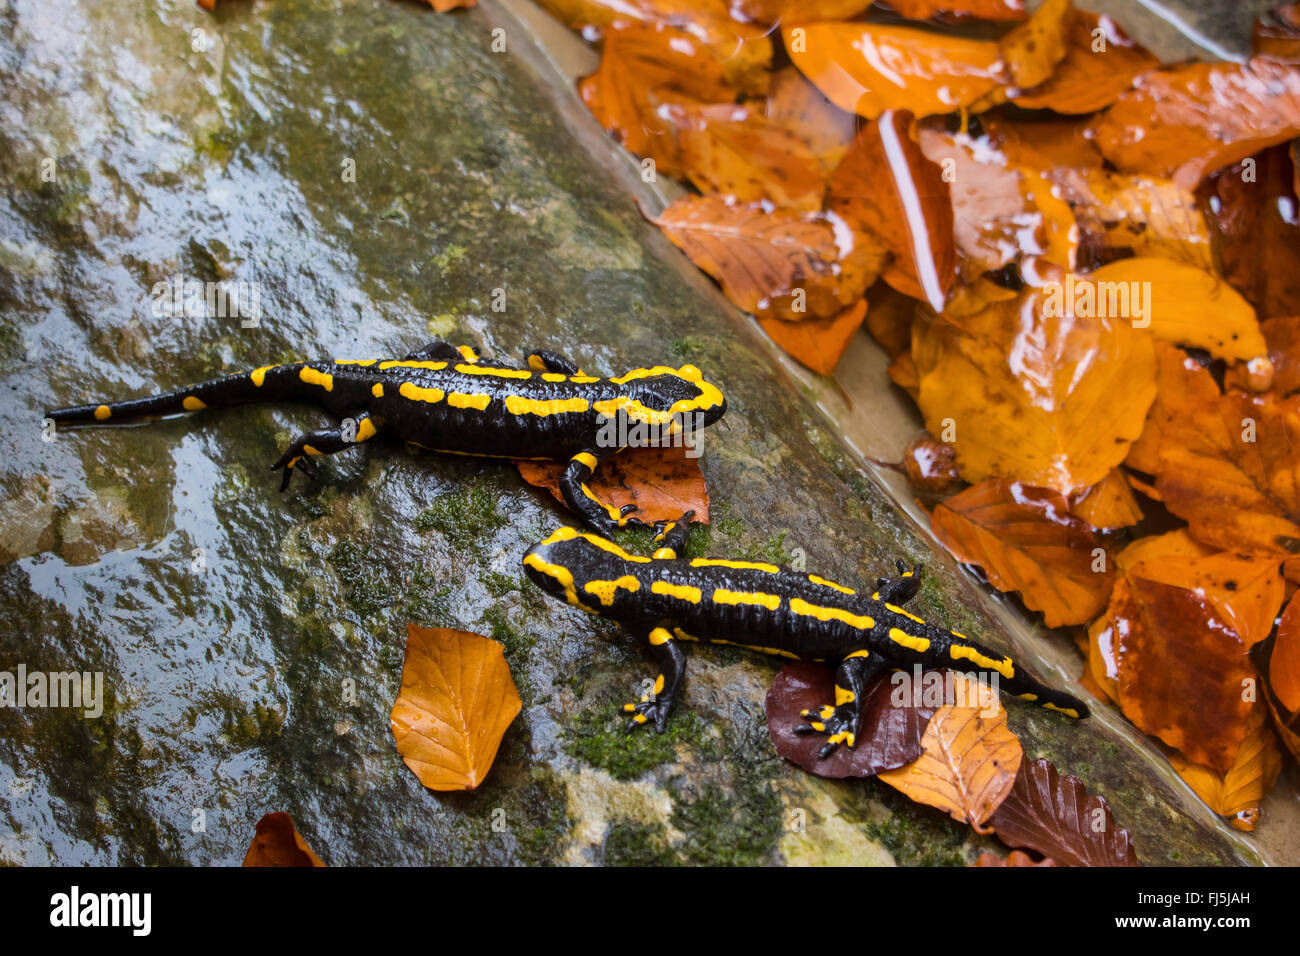 European fire salamander (Salamandra salamandra), two individuals sitting on a rock a a forest creek, Switzerland, Sankt Gallen Stock Photo